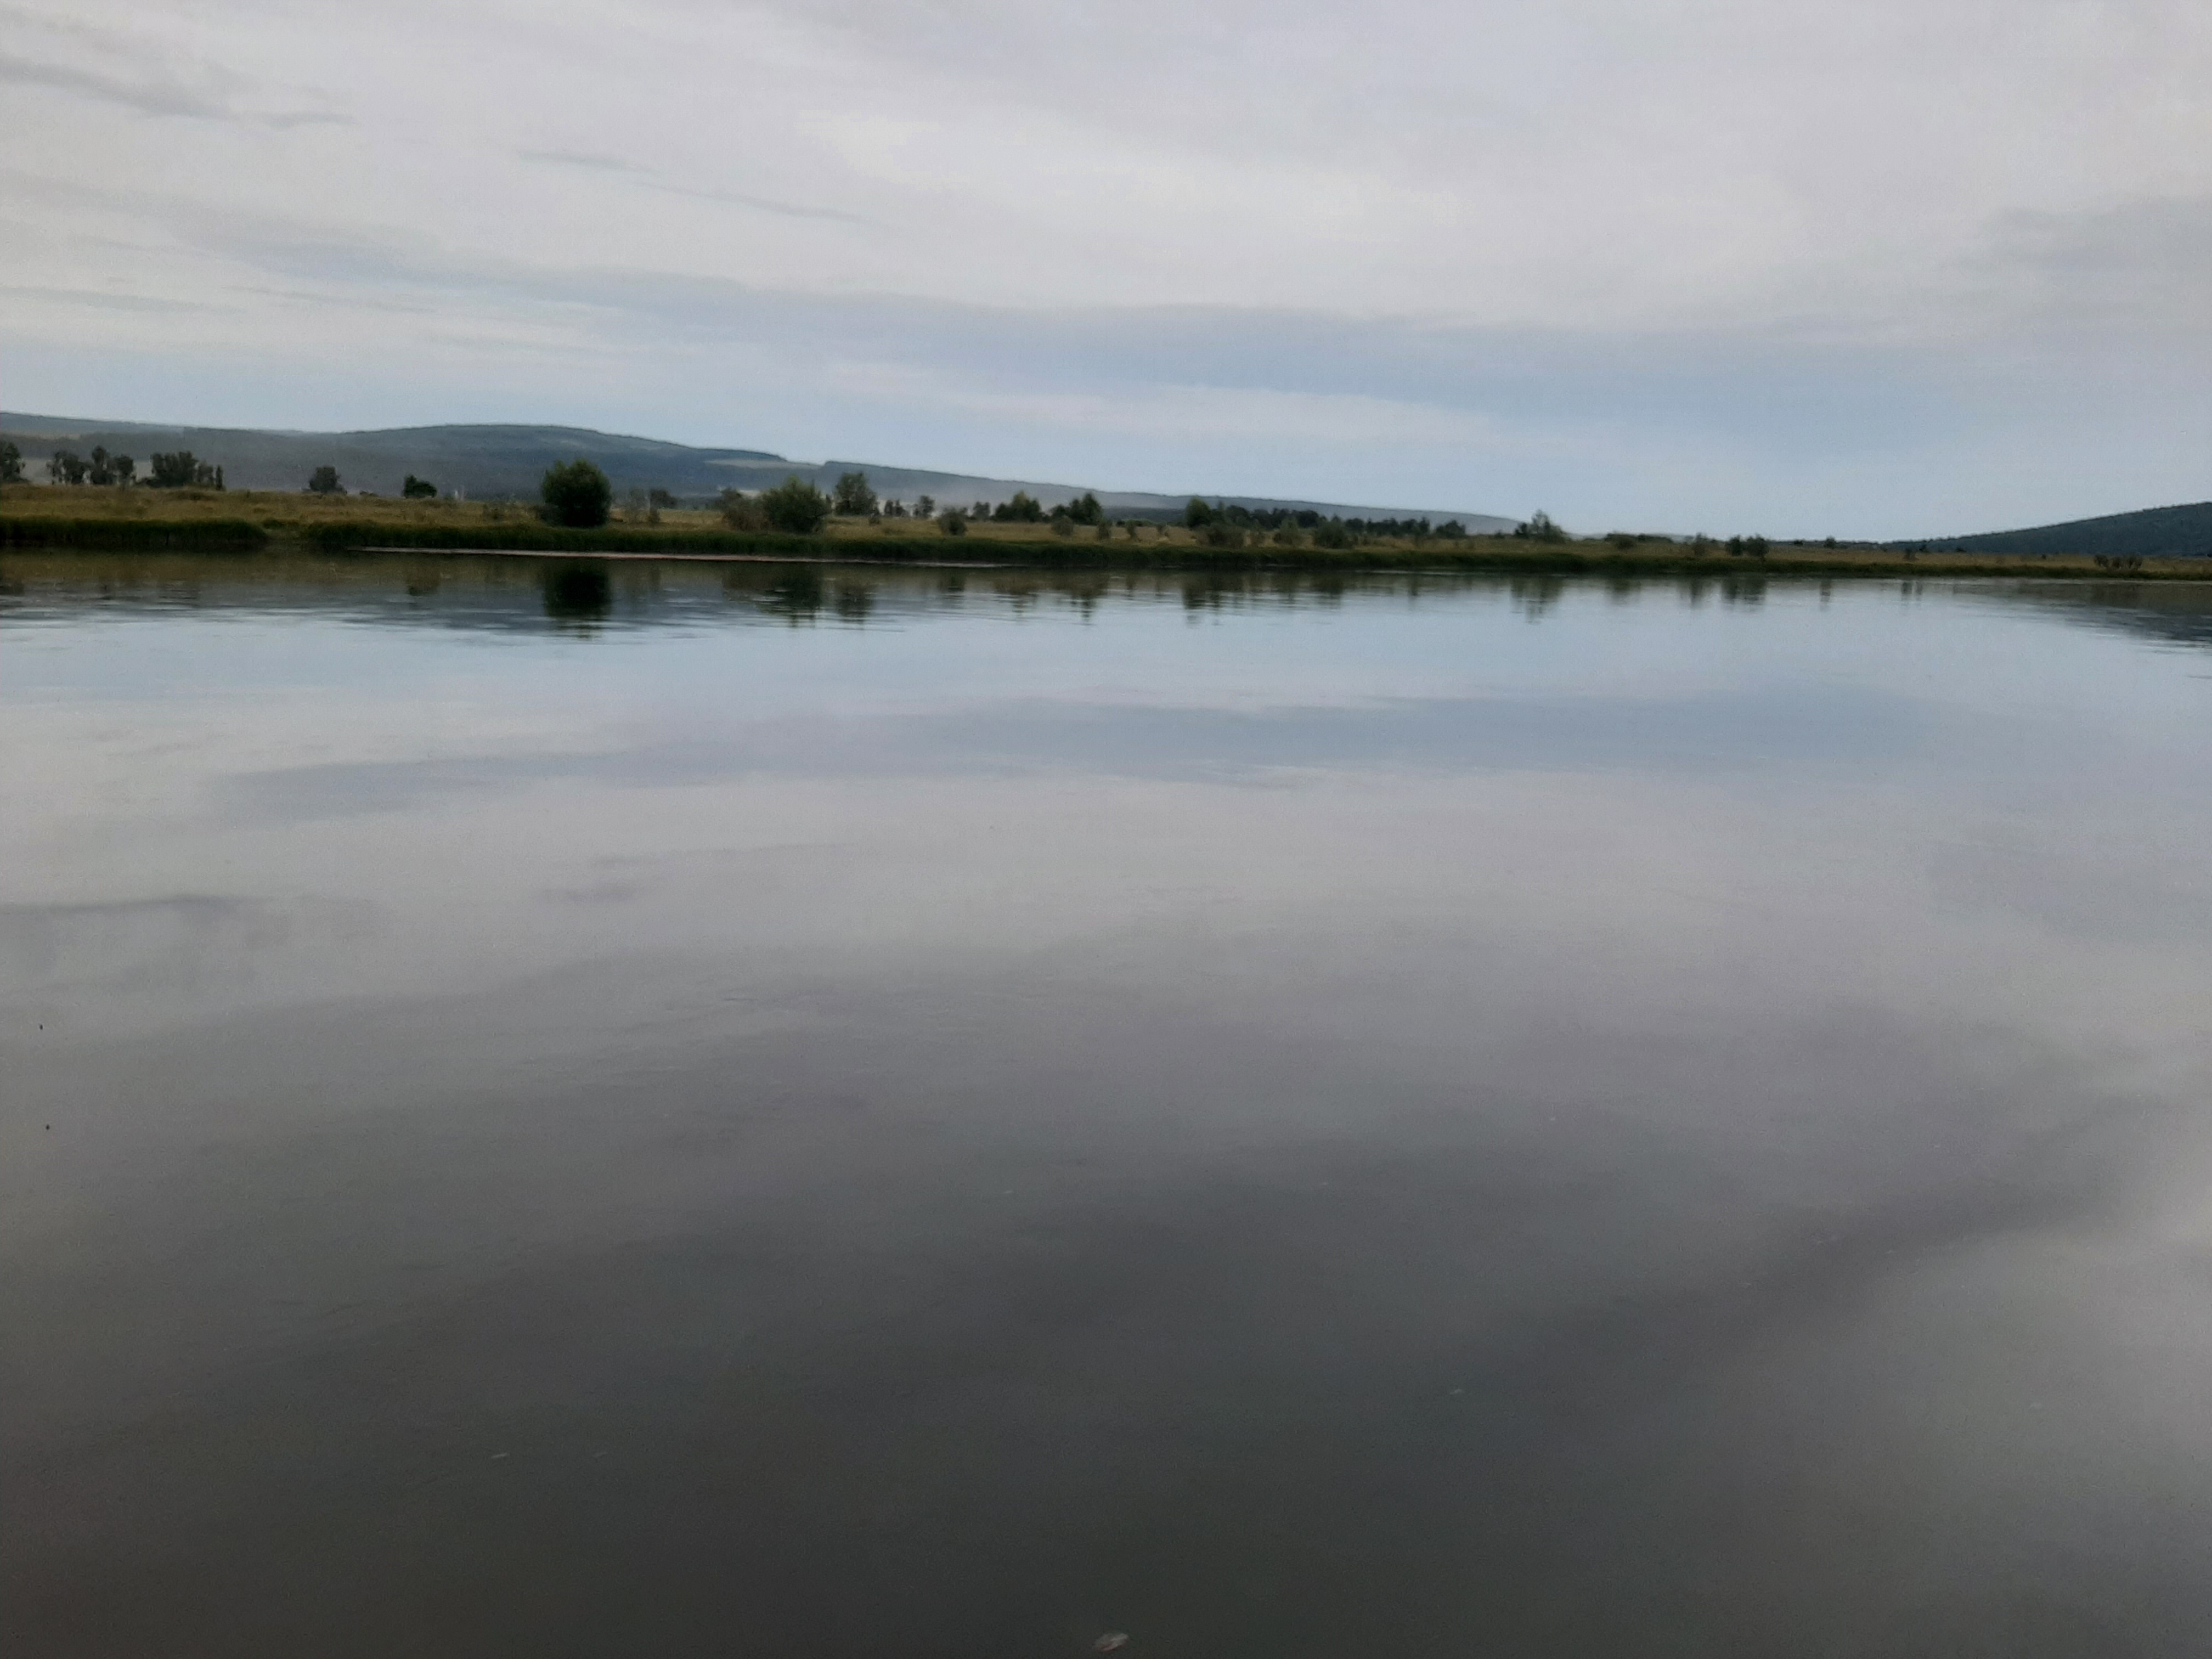 The shore of the calm Lena River